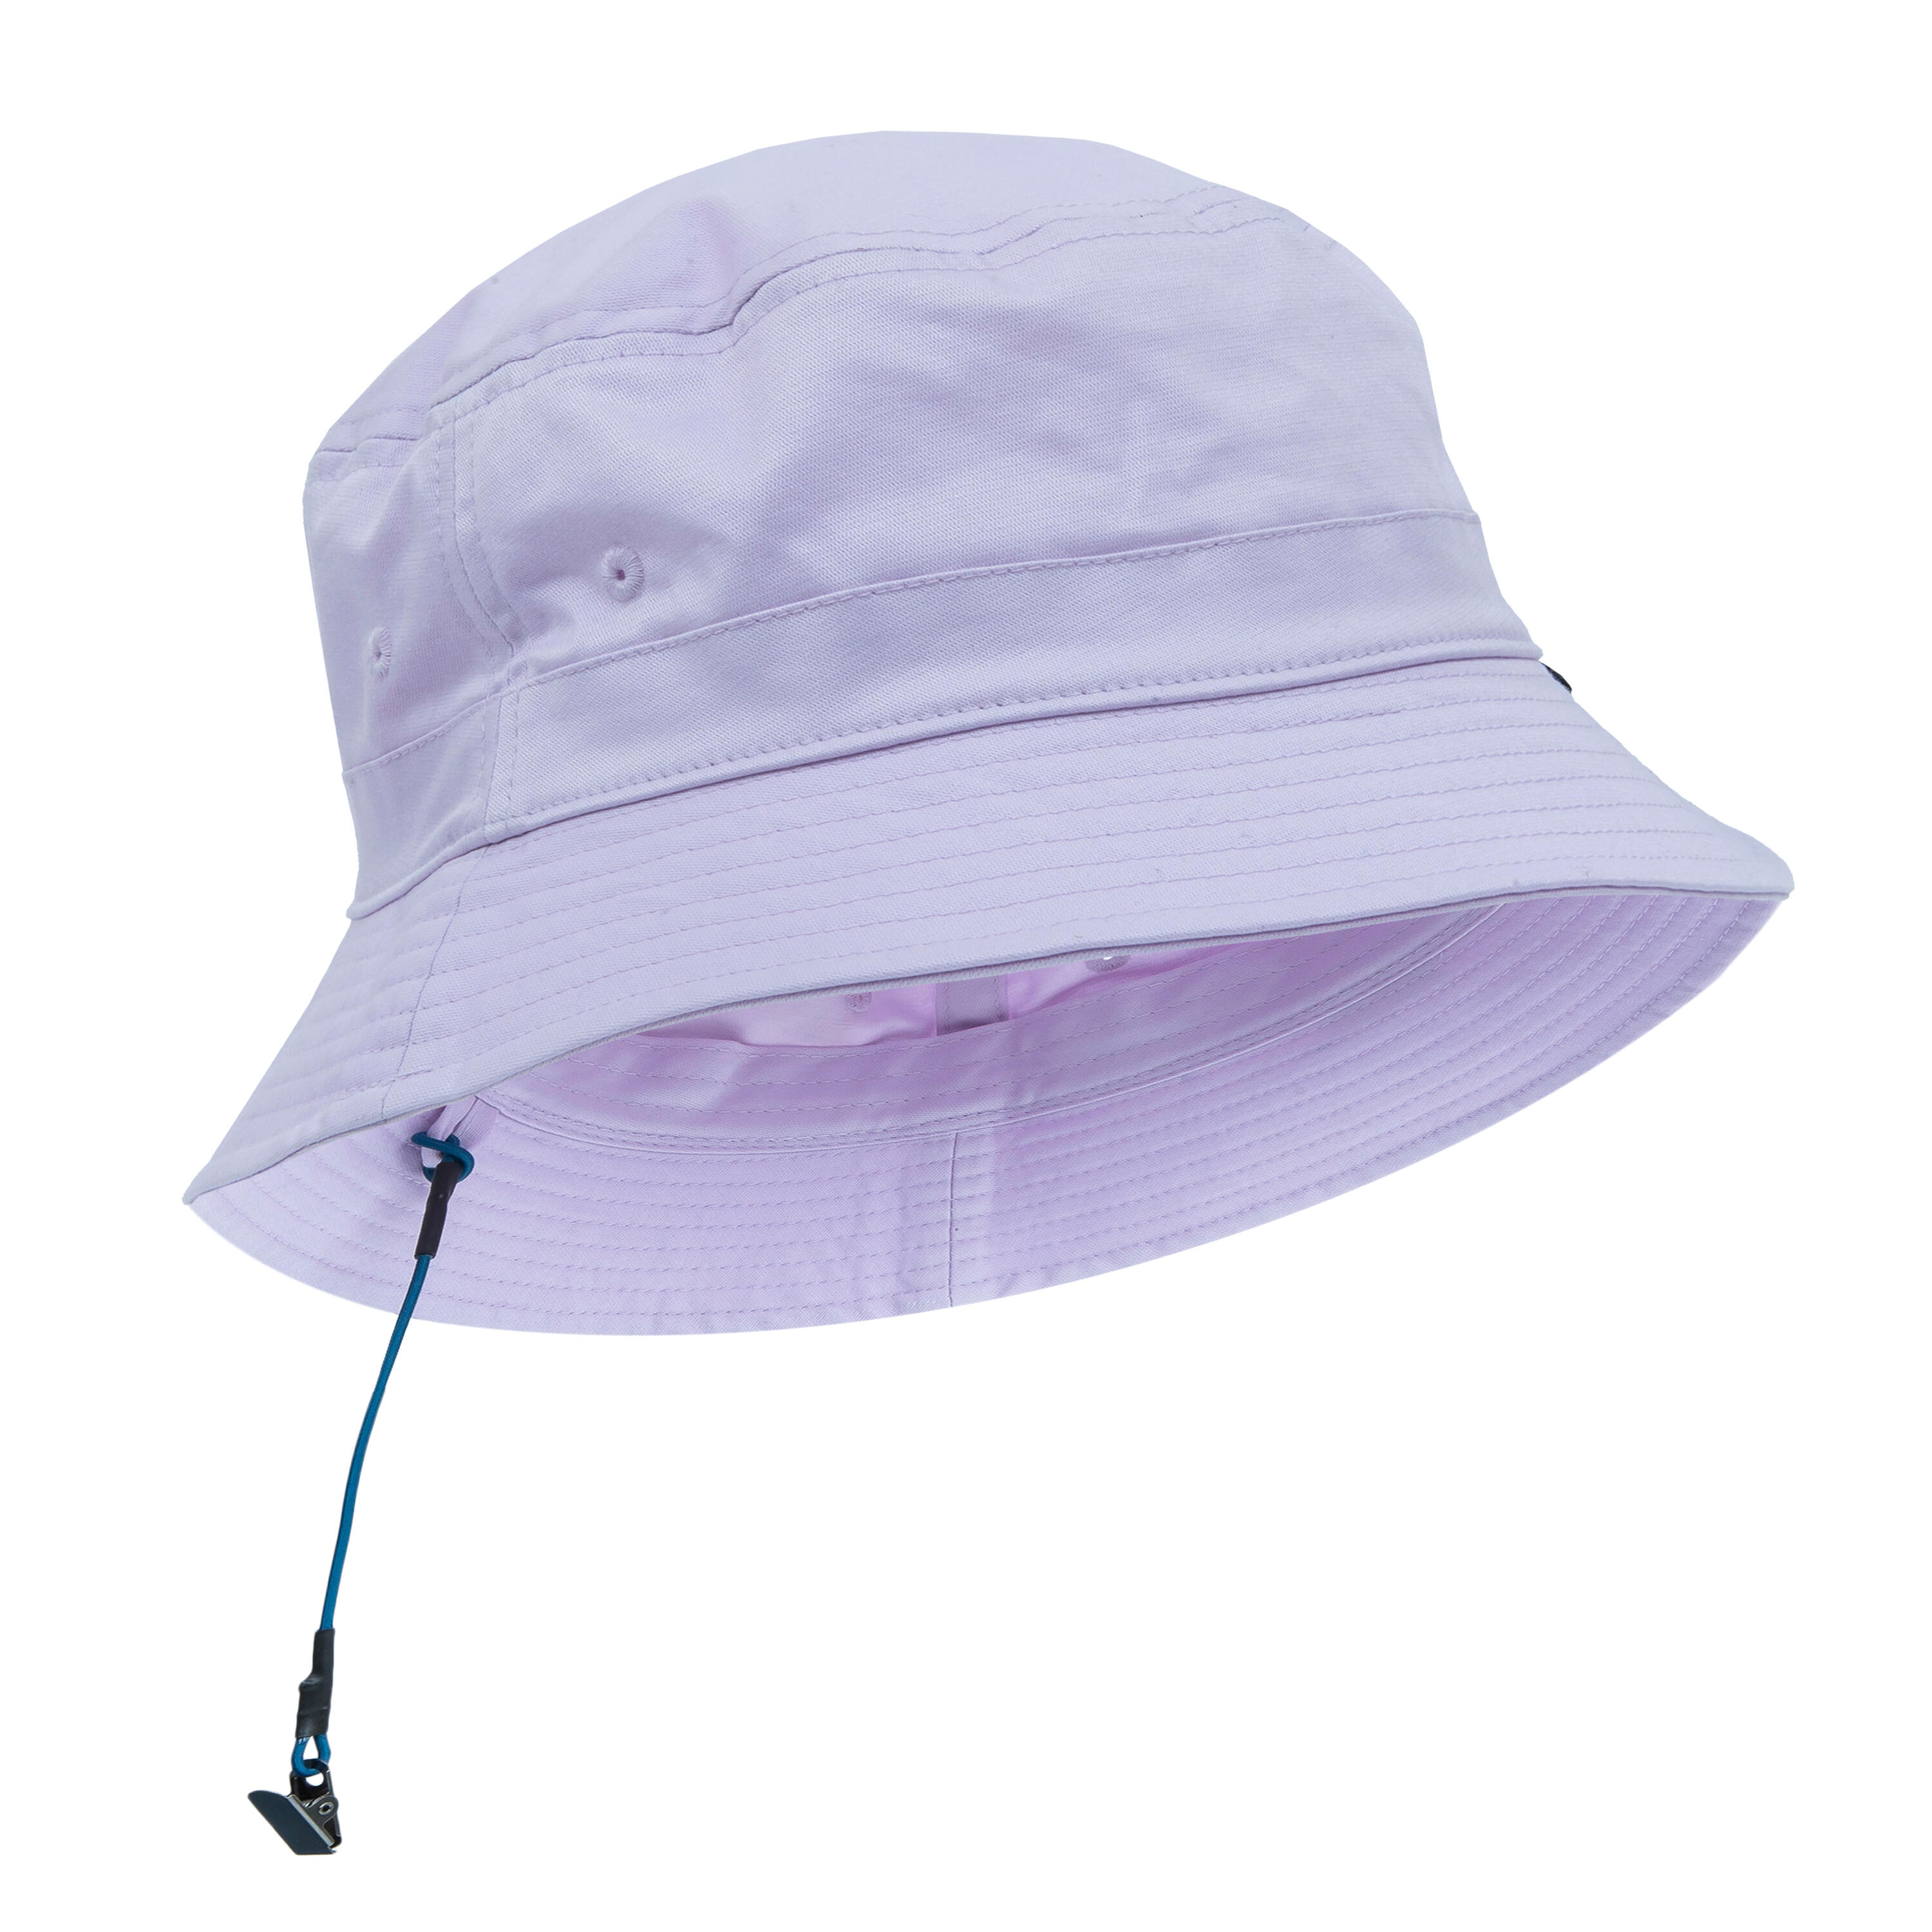 Adults’ Sailing Boat Hat 100 - Lavender Cotton